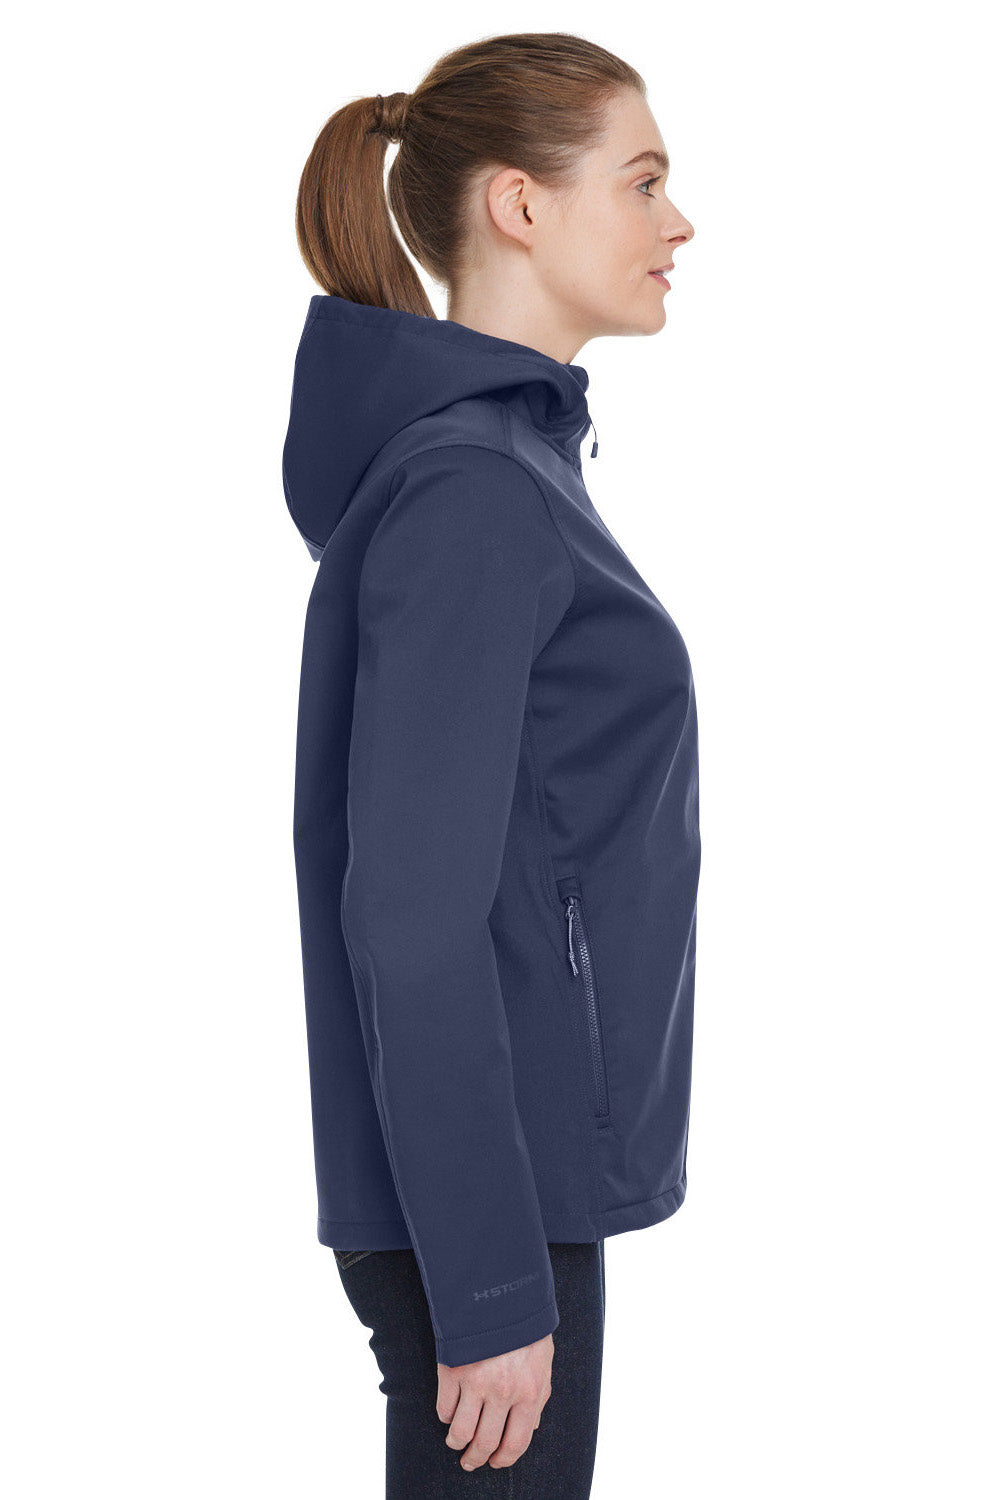 Under Armour 1371595 Womens CGI Shield 2.0 Windproof & Waterproof Full Zip Hooded Jacket Midnight Navy Blue Model Side